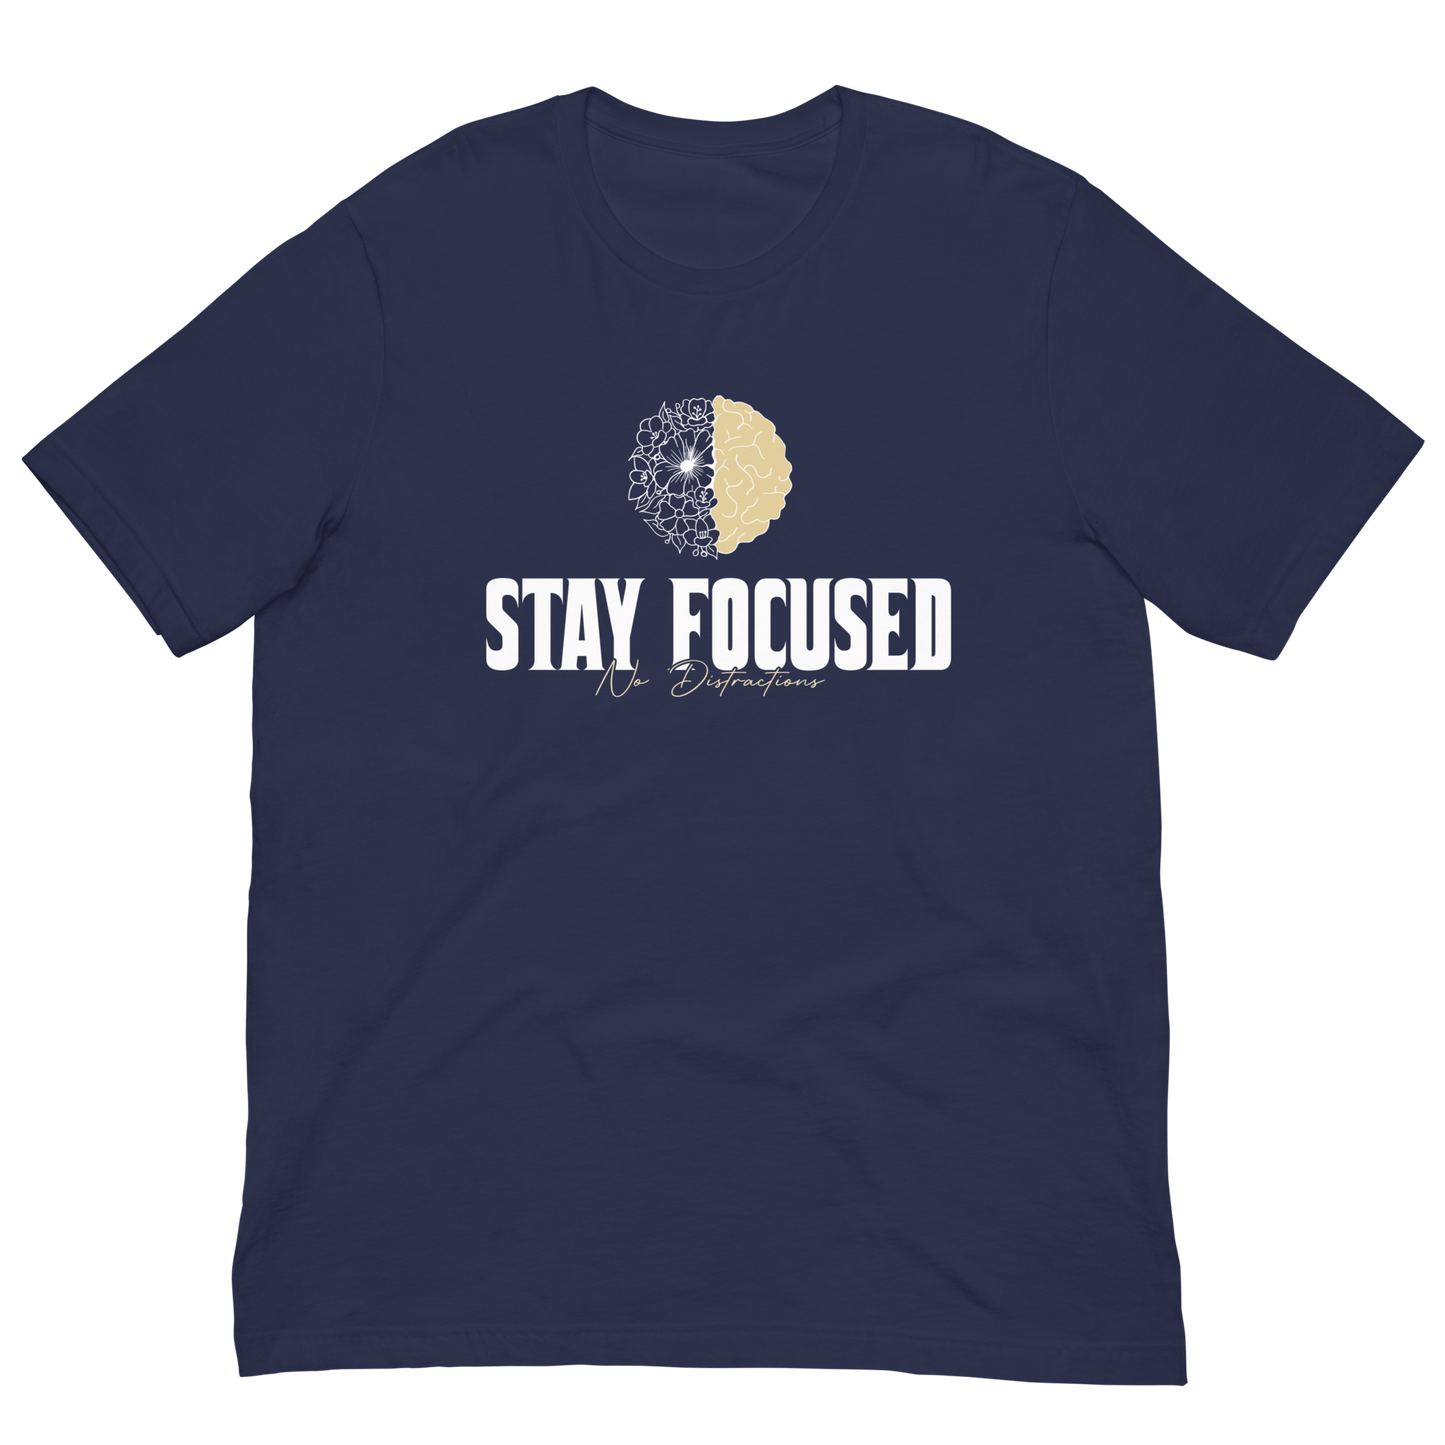 Stay Focused 'Growth Mindset' Design Short Sleeve Cotton T-Shirt - Navy